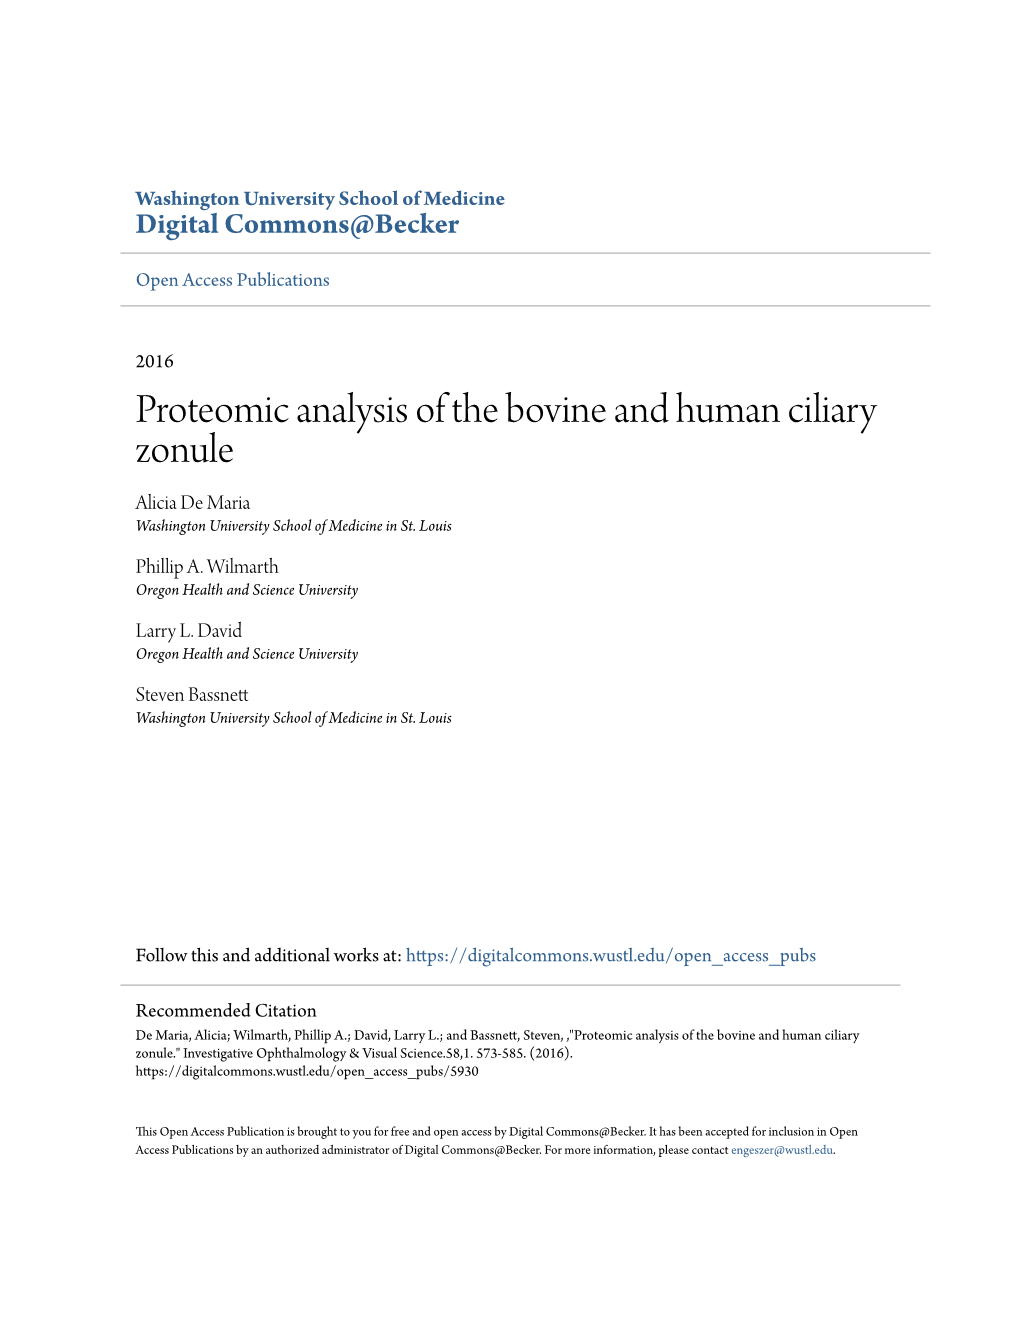 Proteomic Analysis of the Bovine and Human Ciliary Zonule Alicia De Maria Washington University School of Medicine in St